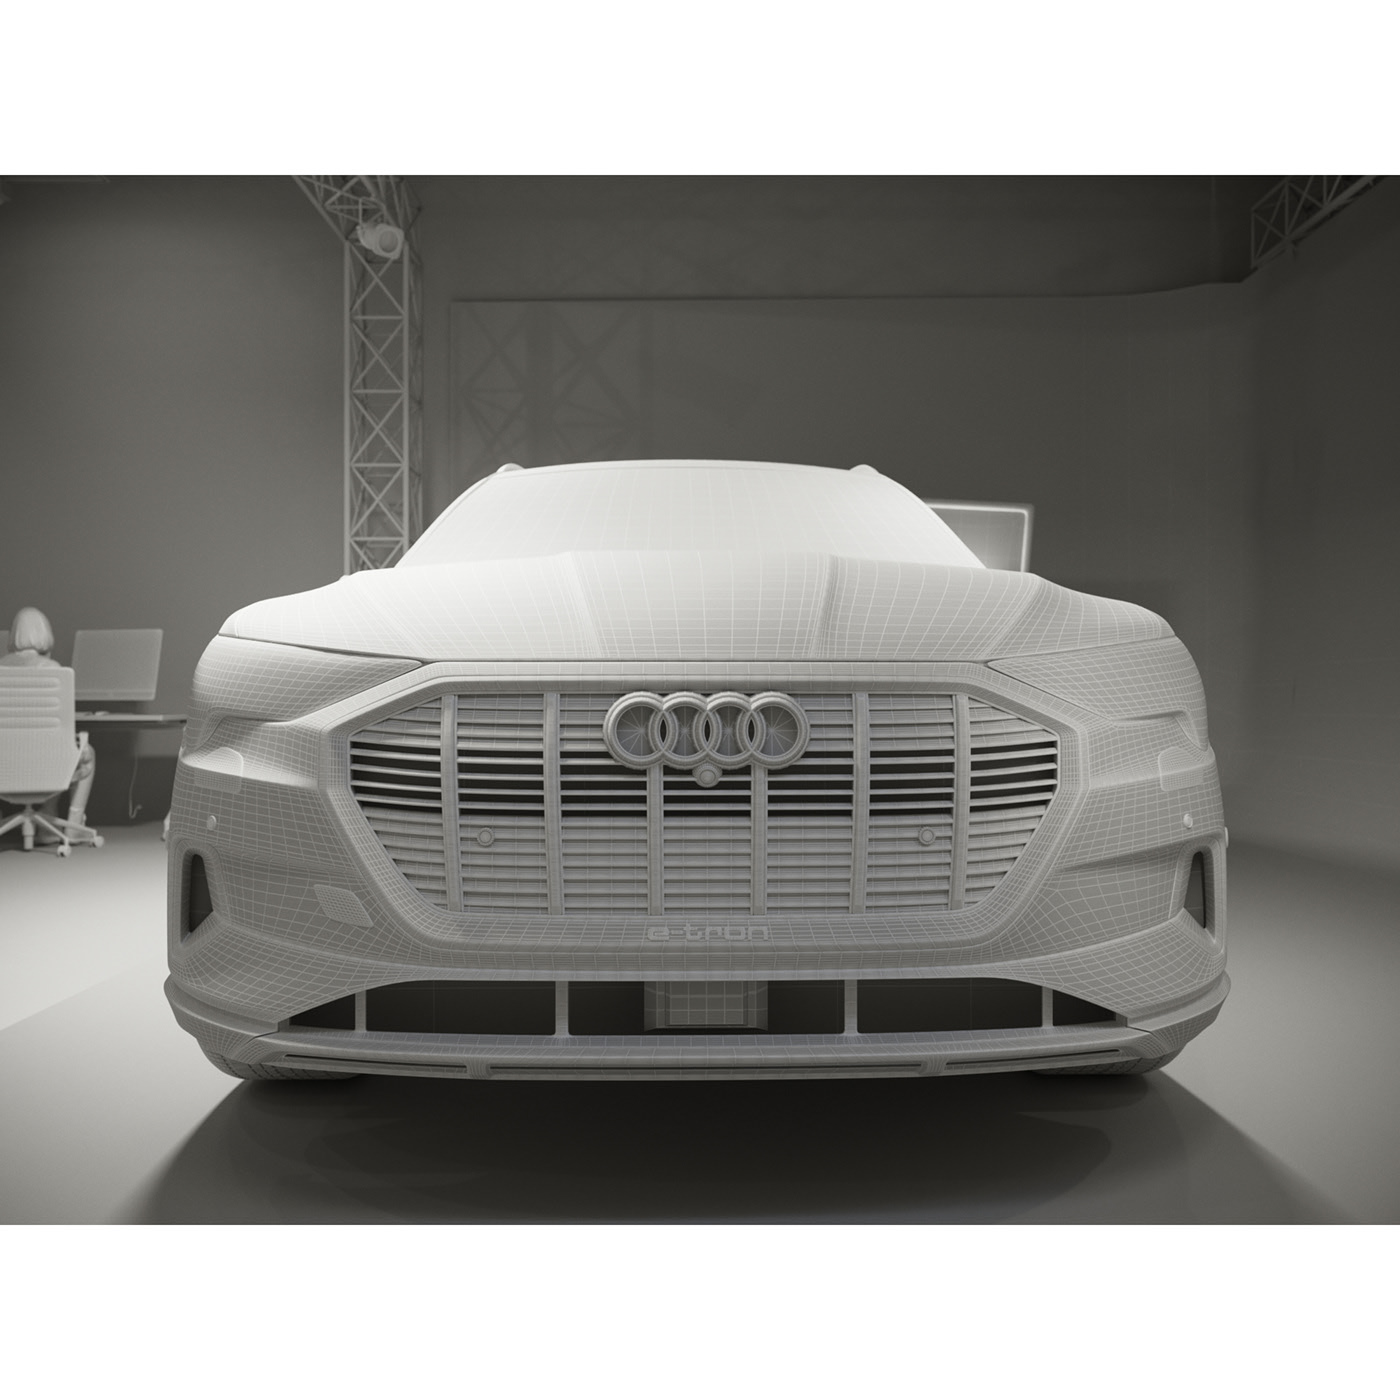 Behind the scenes- Audi Etron